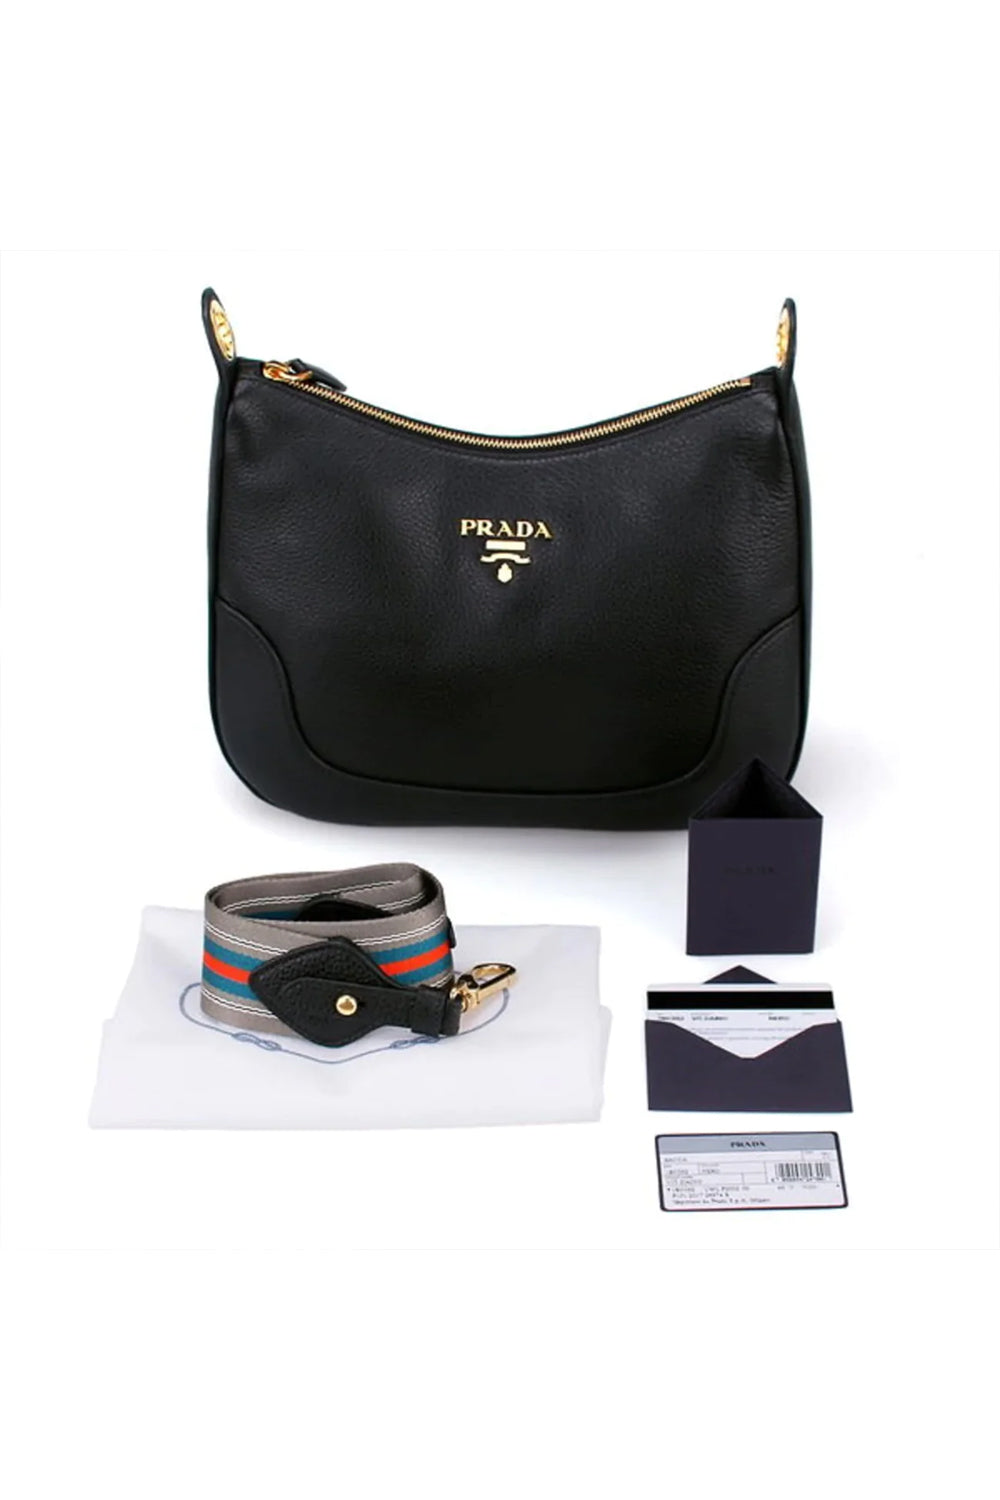 Prada Vitello Phenix Leather Web Stripe Handbag